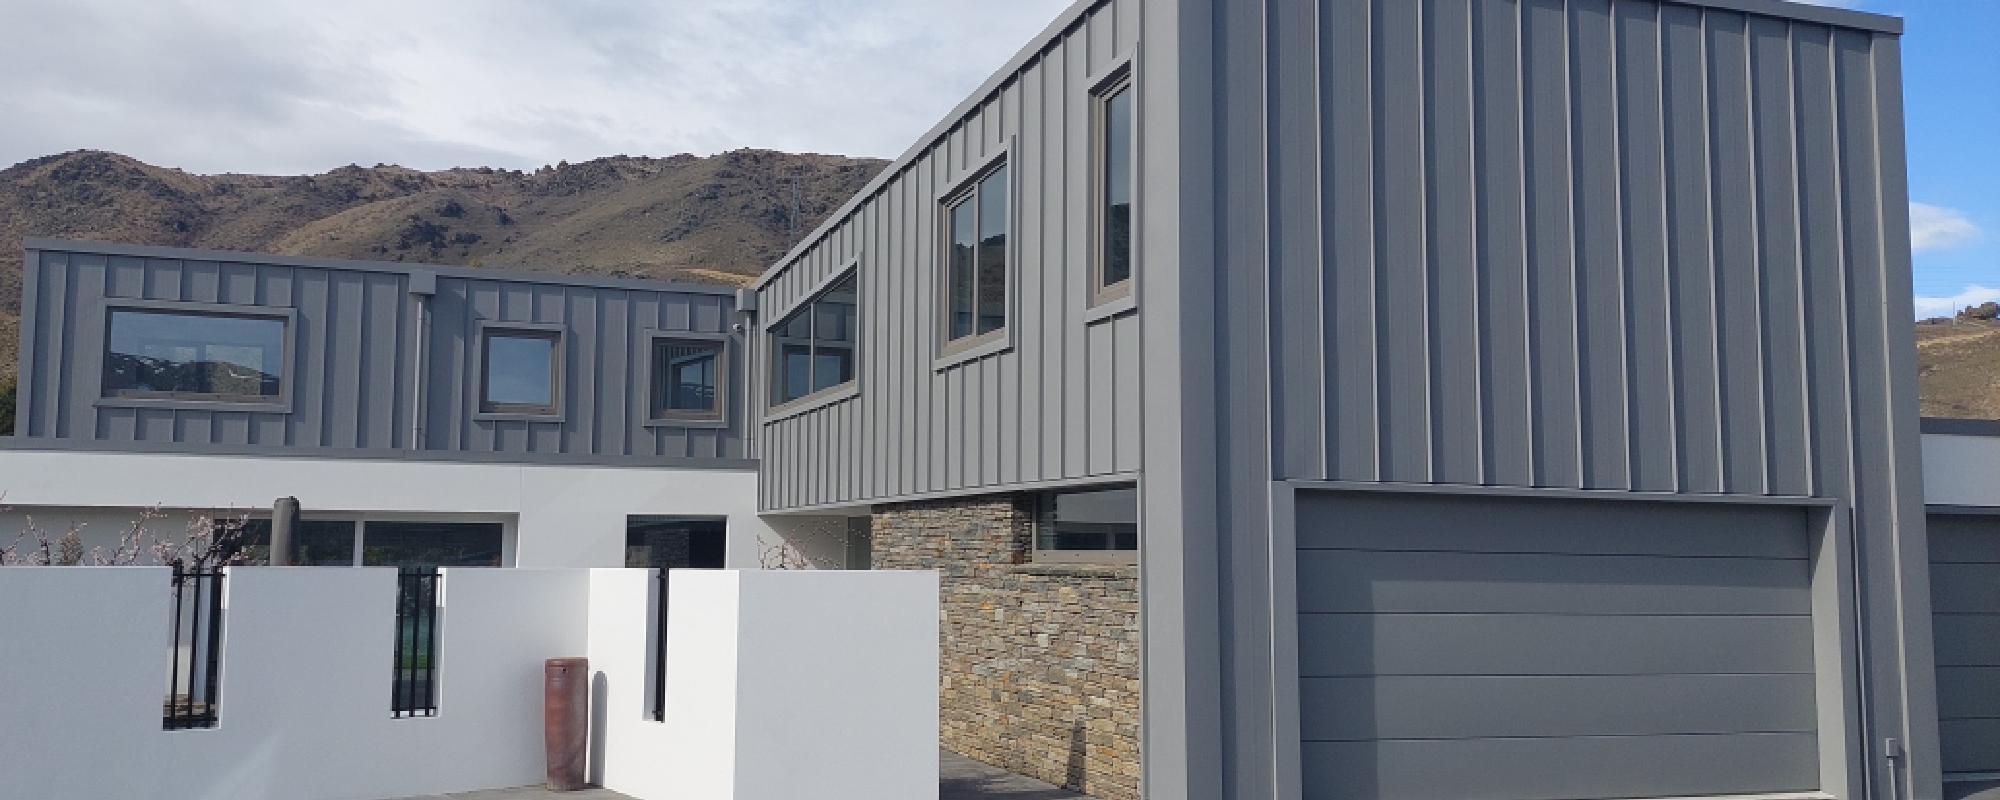 Modern box-like predominantly grey home with matching uPVC window and garage door framing 